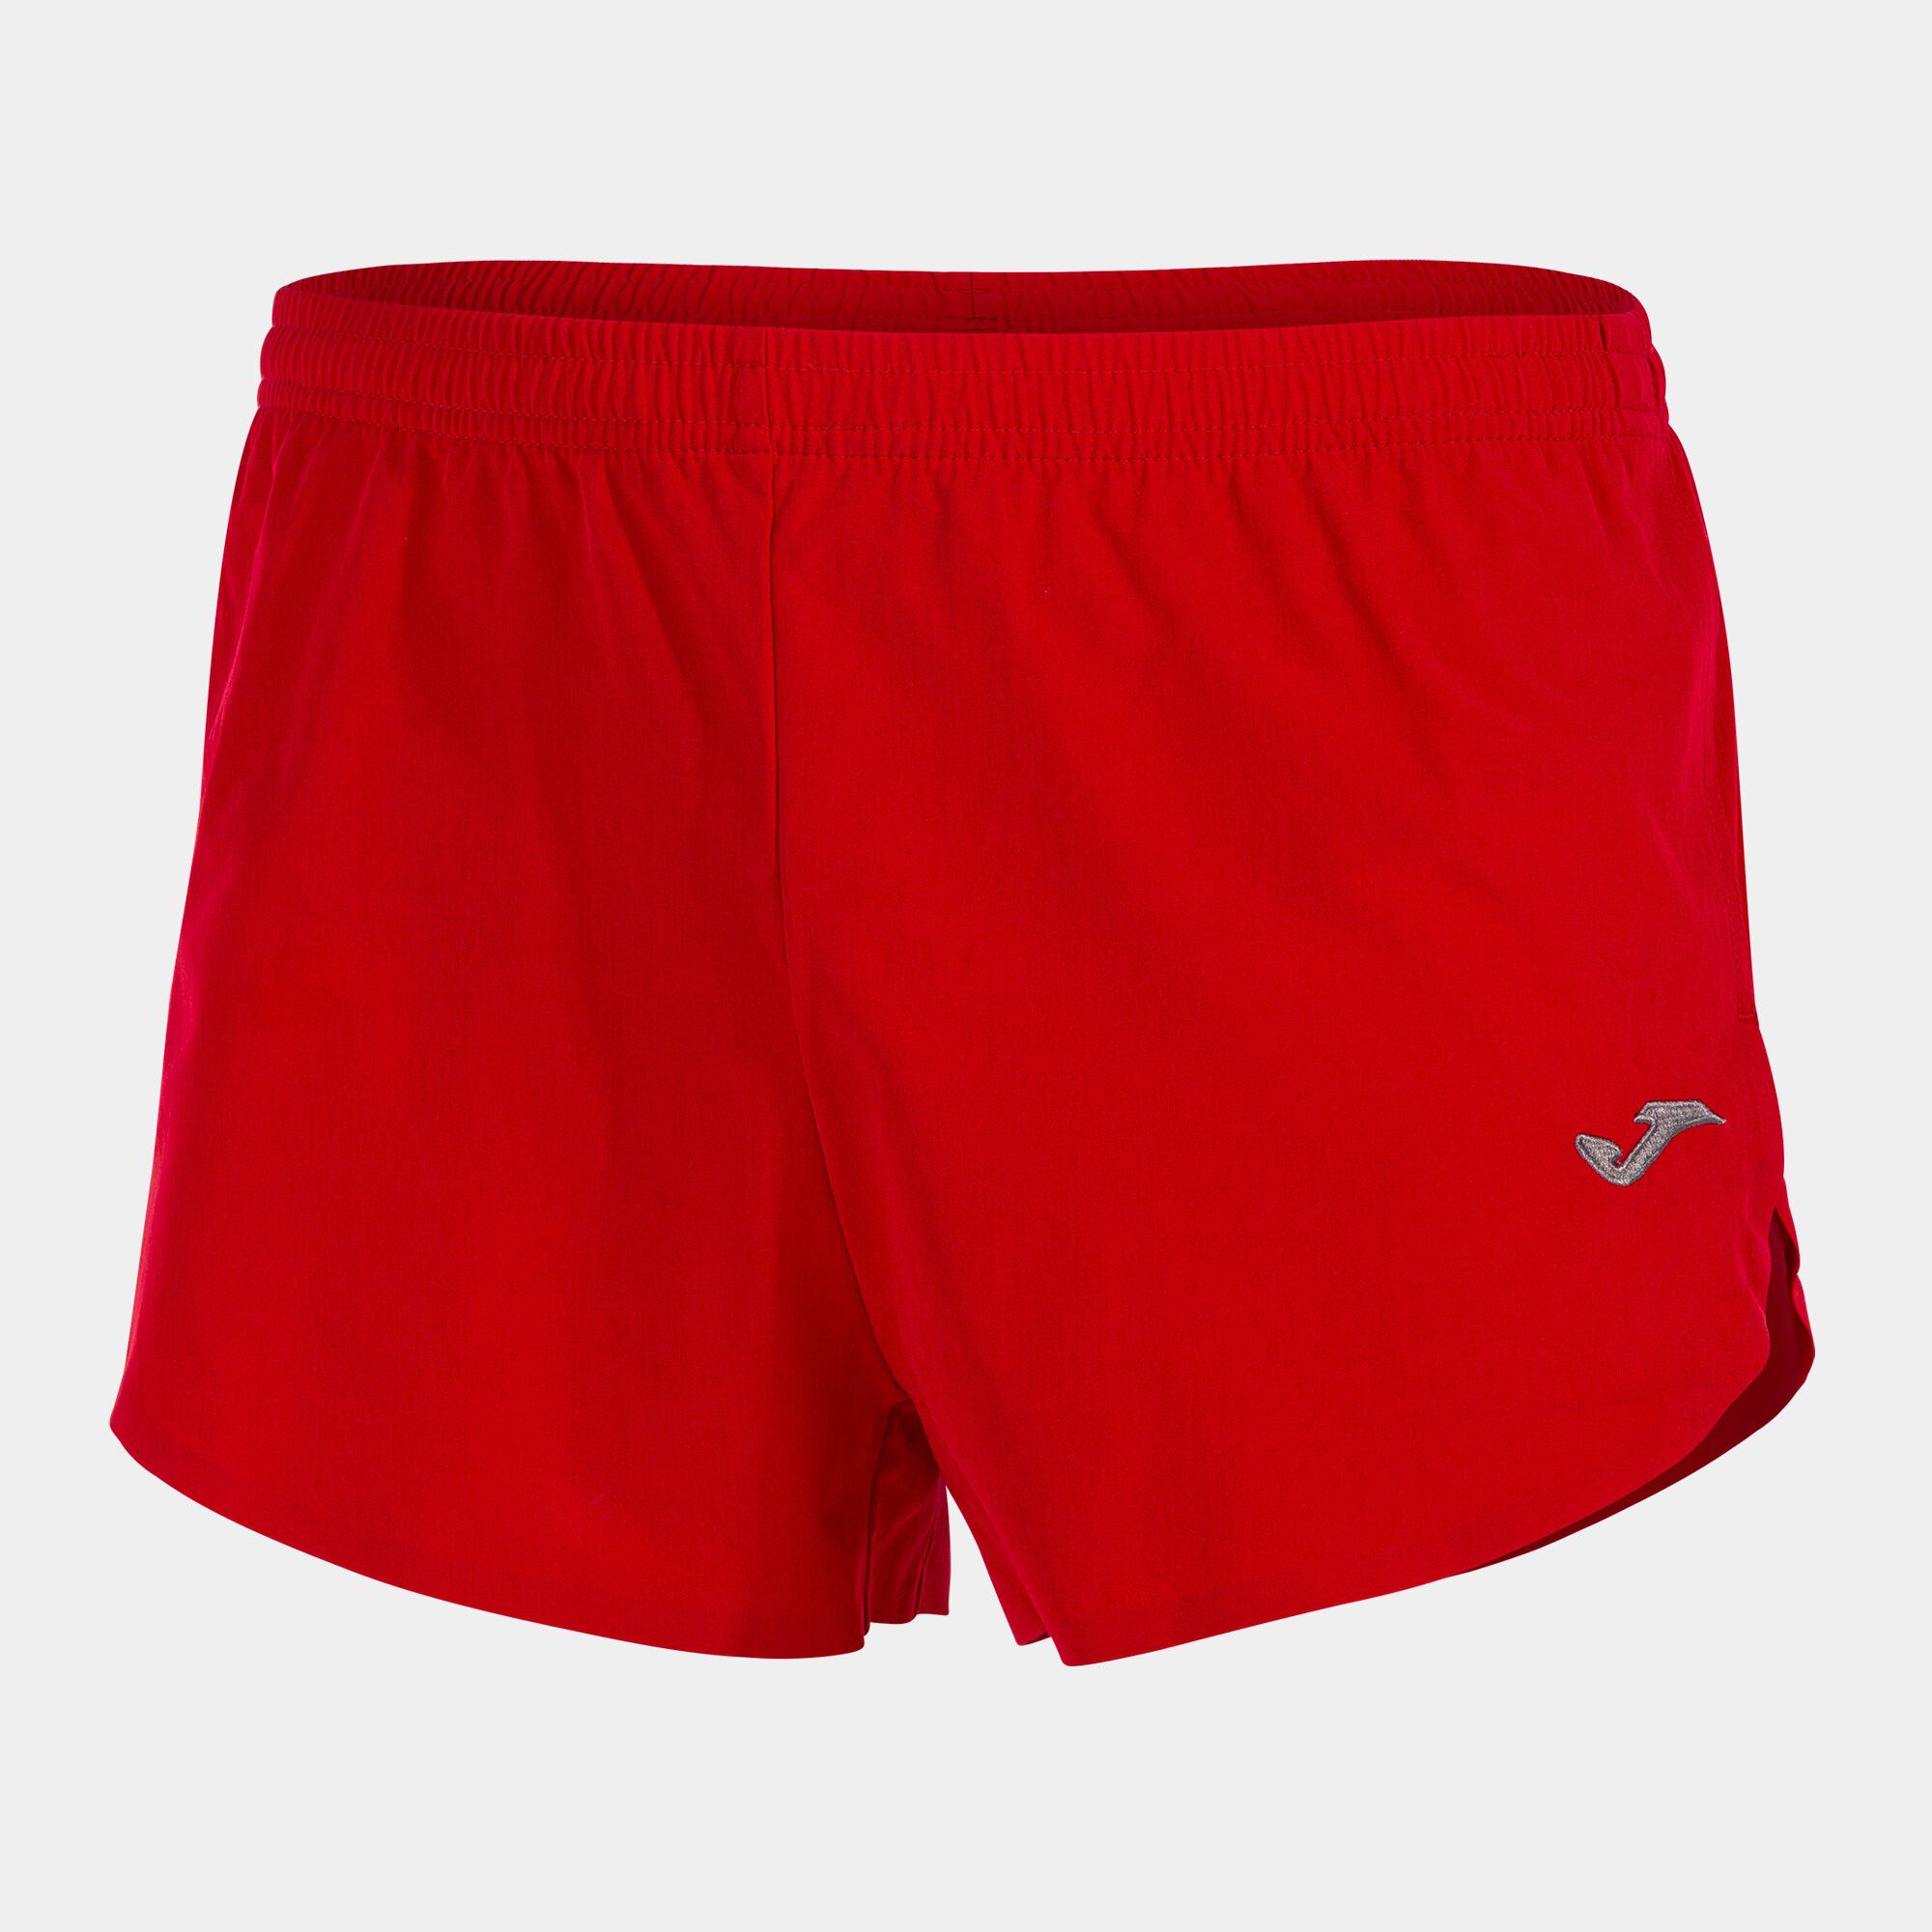 Shorts man Olimpia red